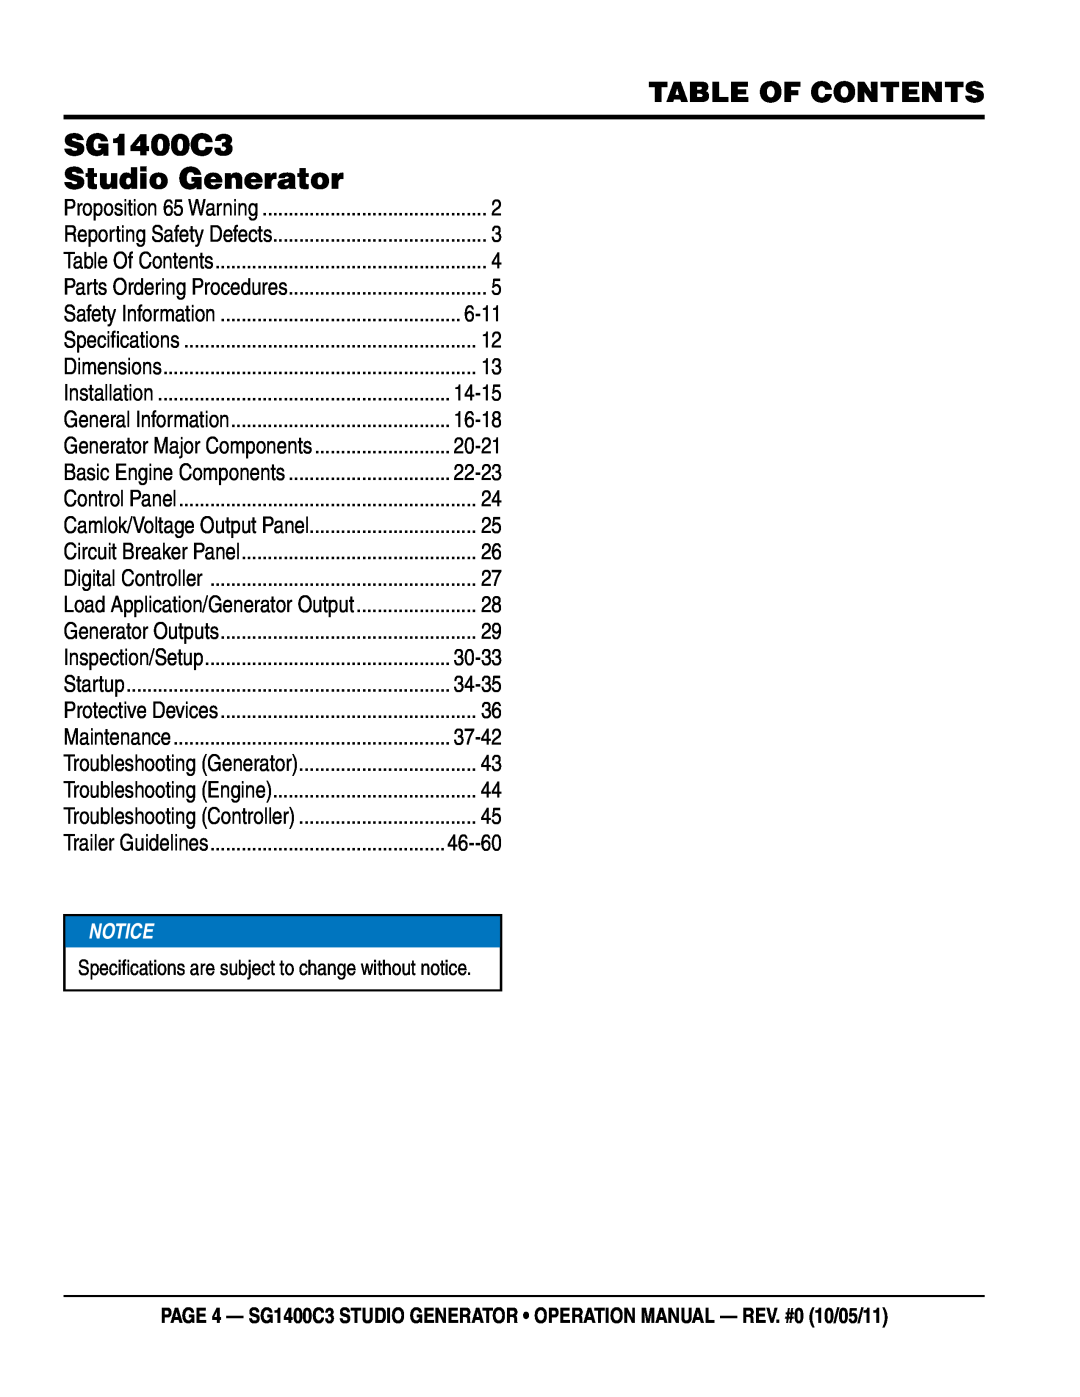 Multiquip SG1400C3 operation manual Table of Contents, Studio Generator, 6-11 